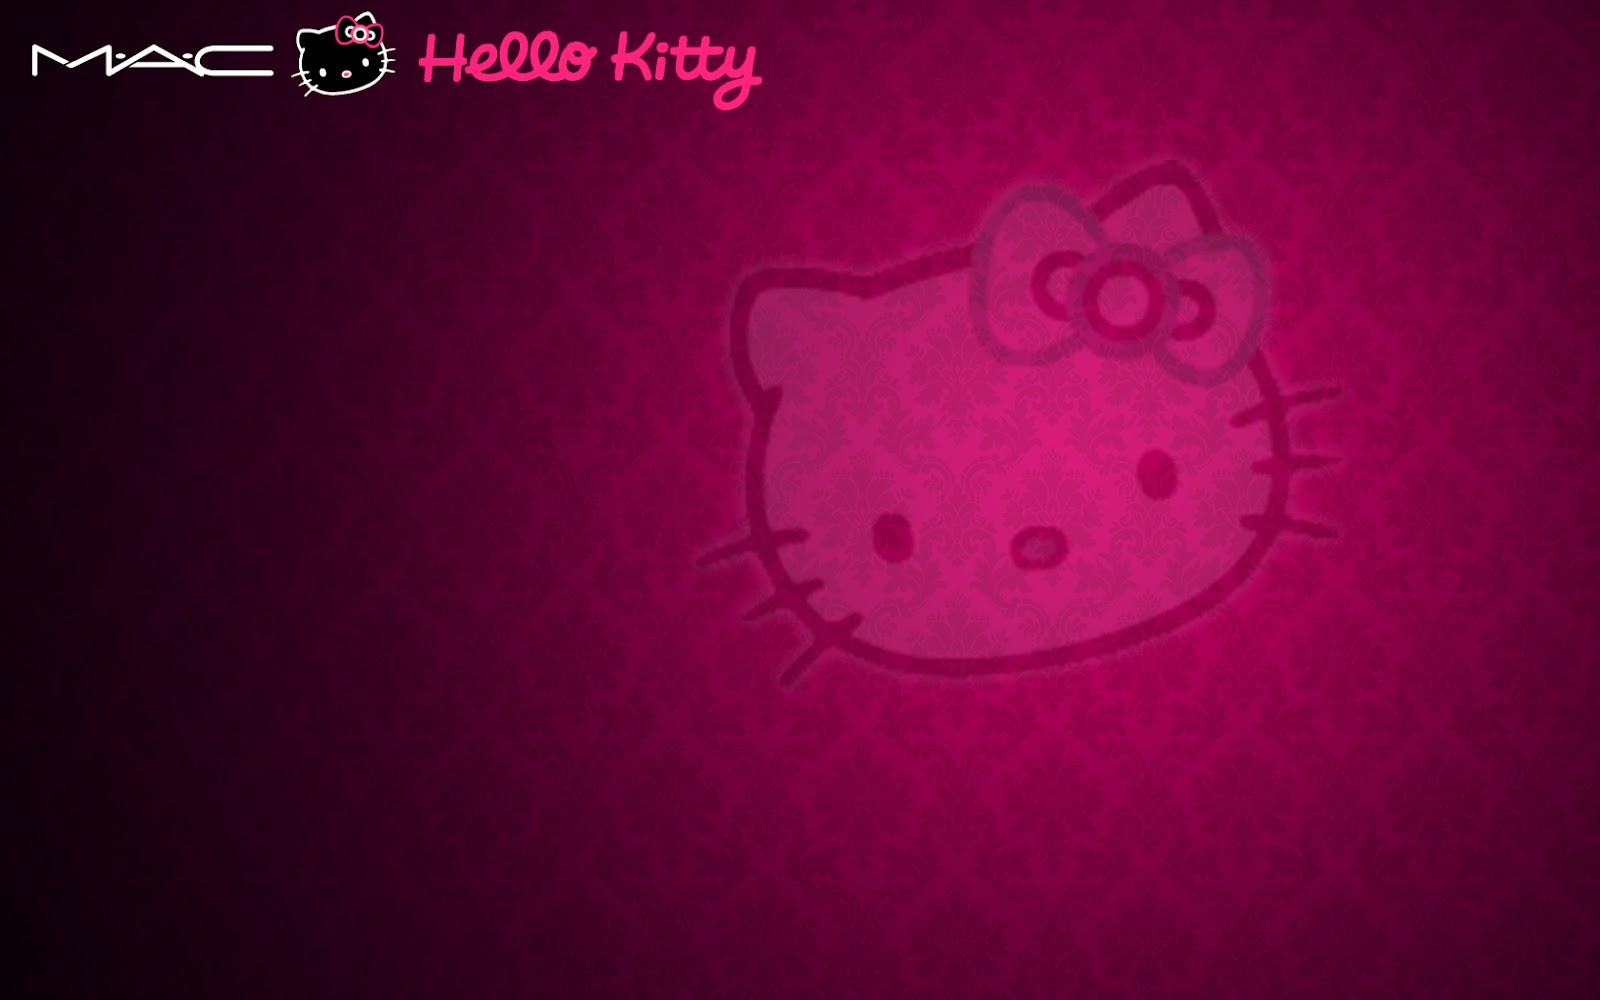 Hello Kitty Wallpaper Pink Cute